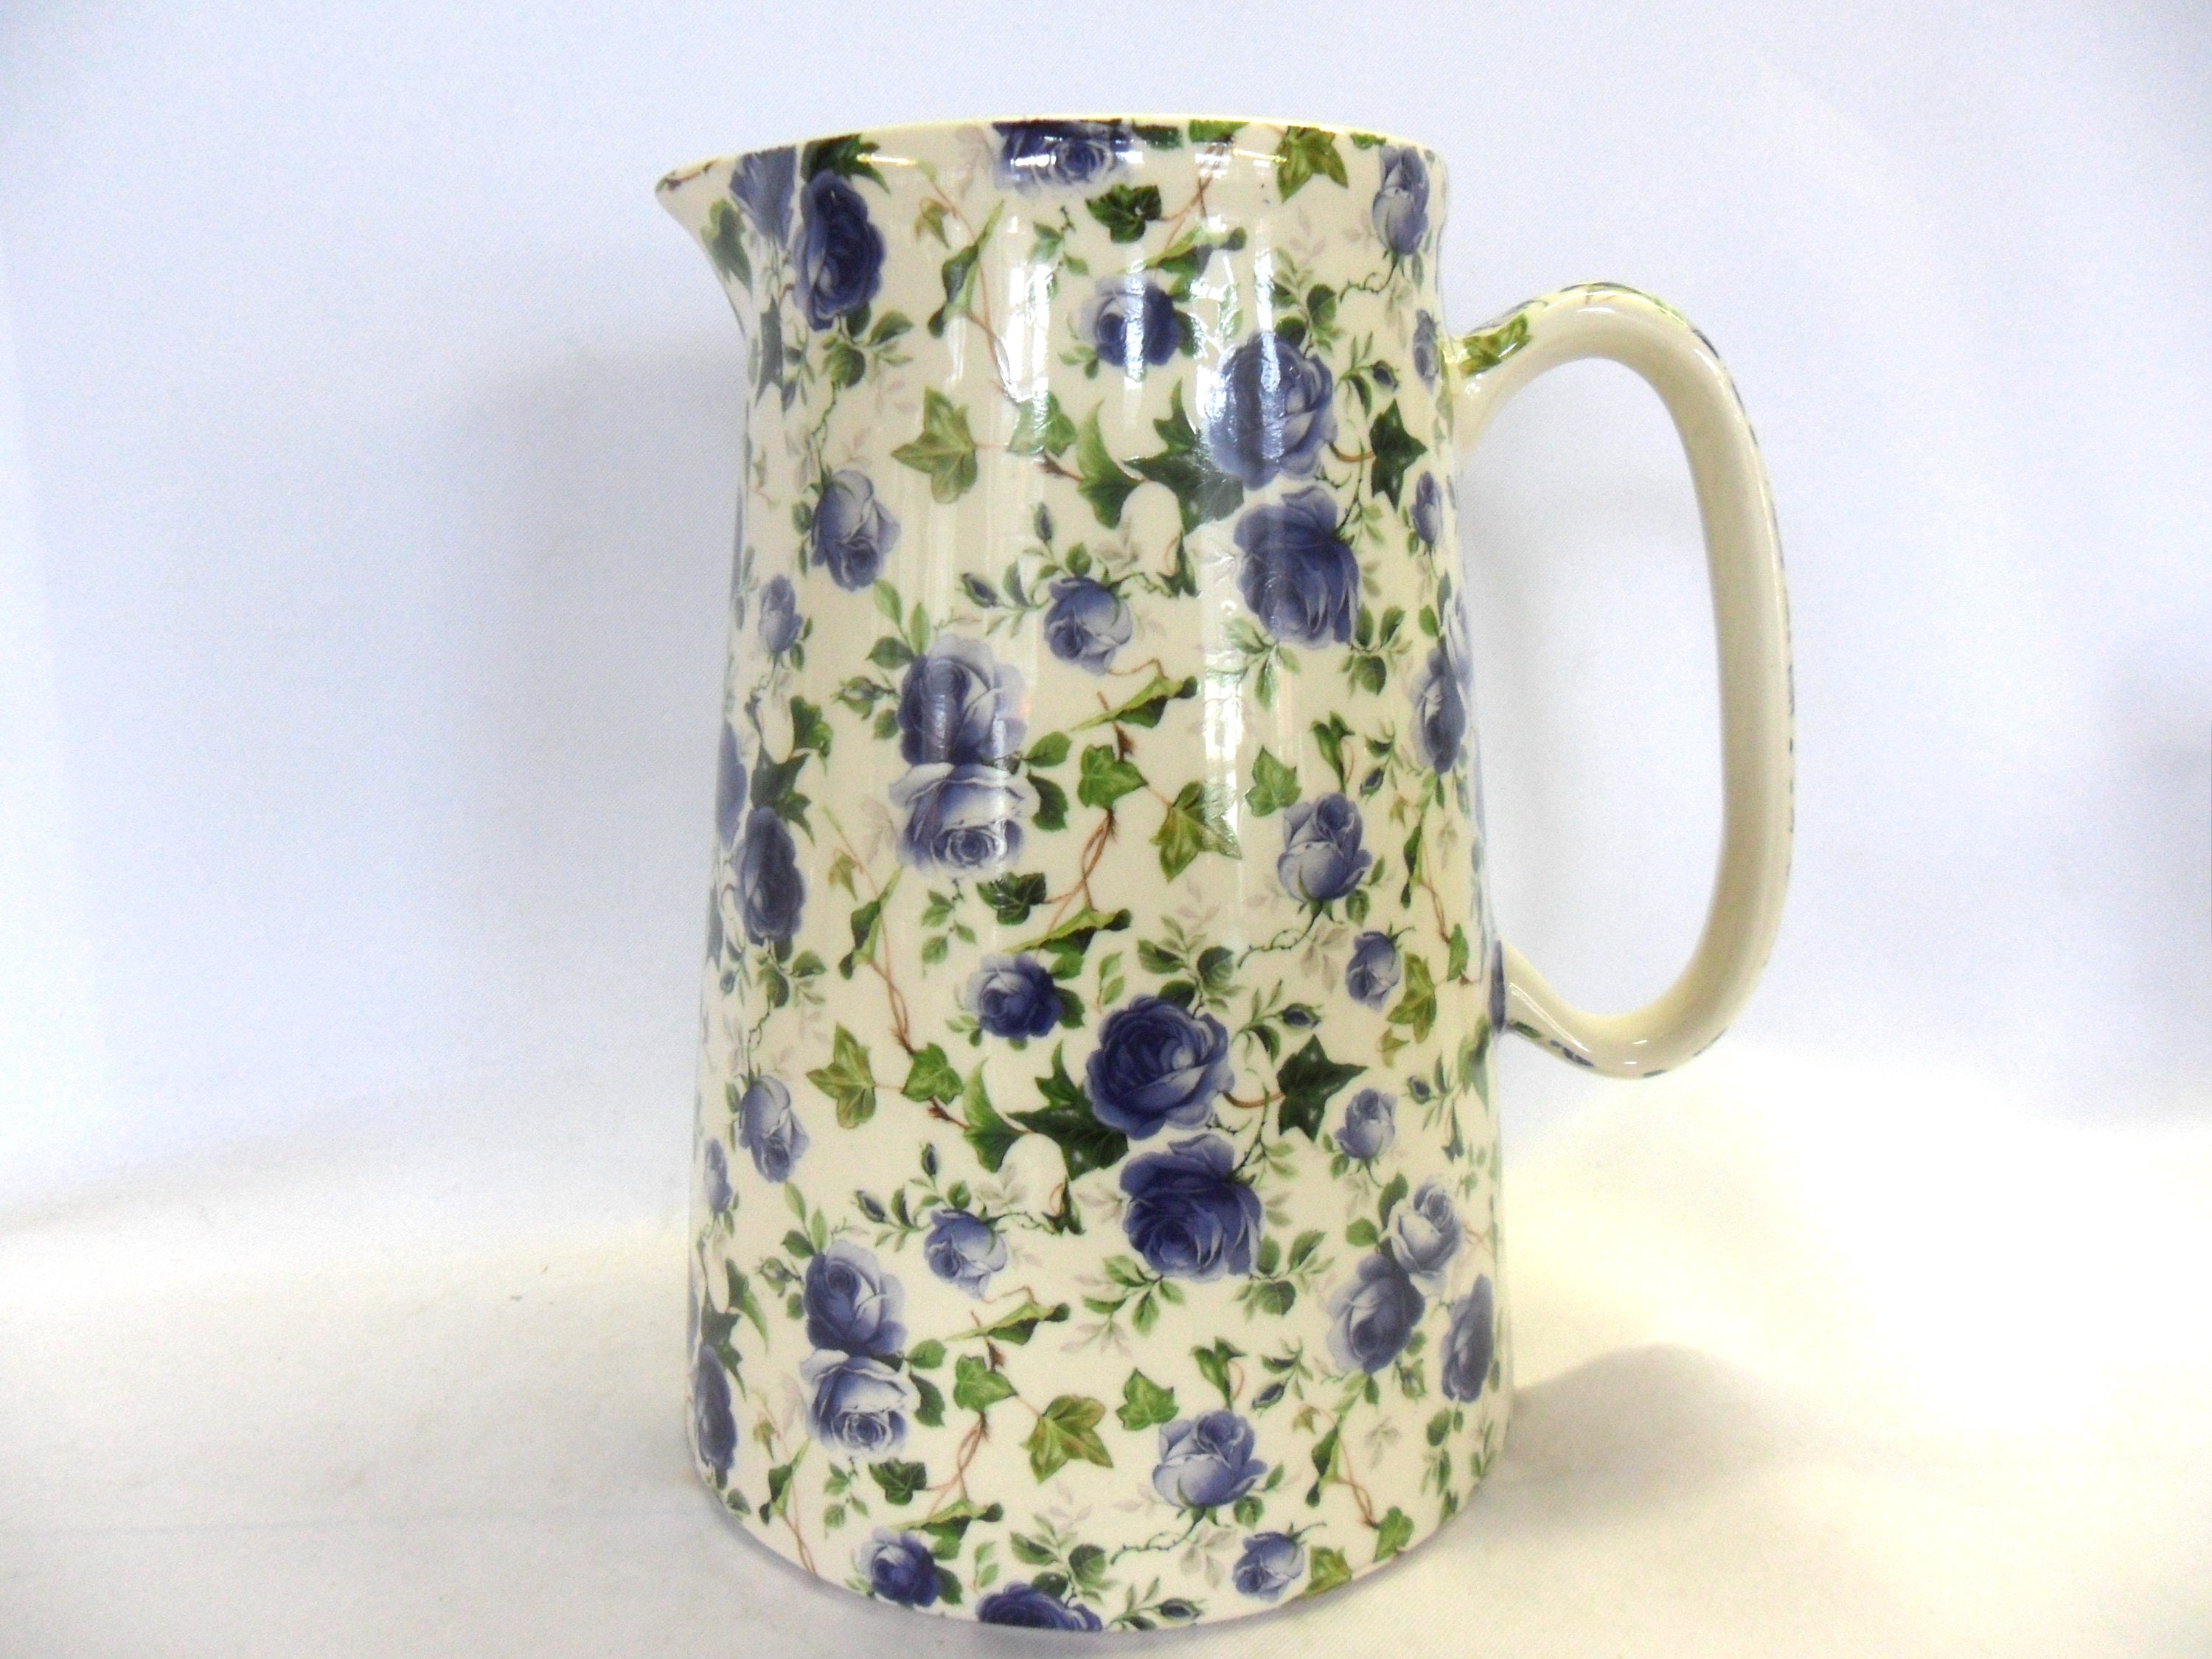 Rose chintz design 4 pint pitcher jug by Heron Cross Pottery 